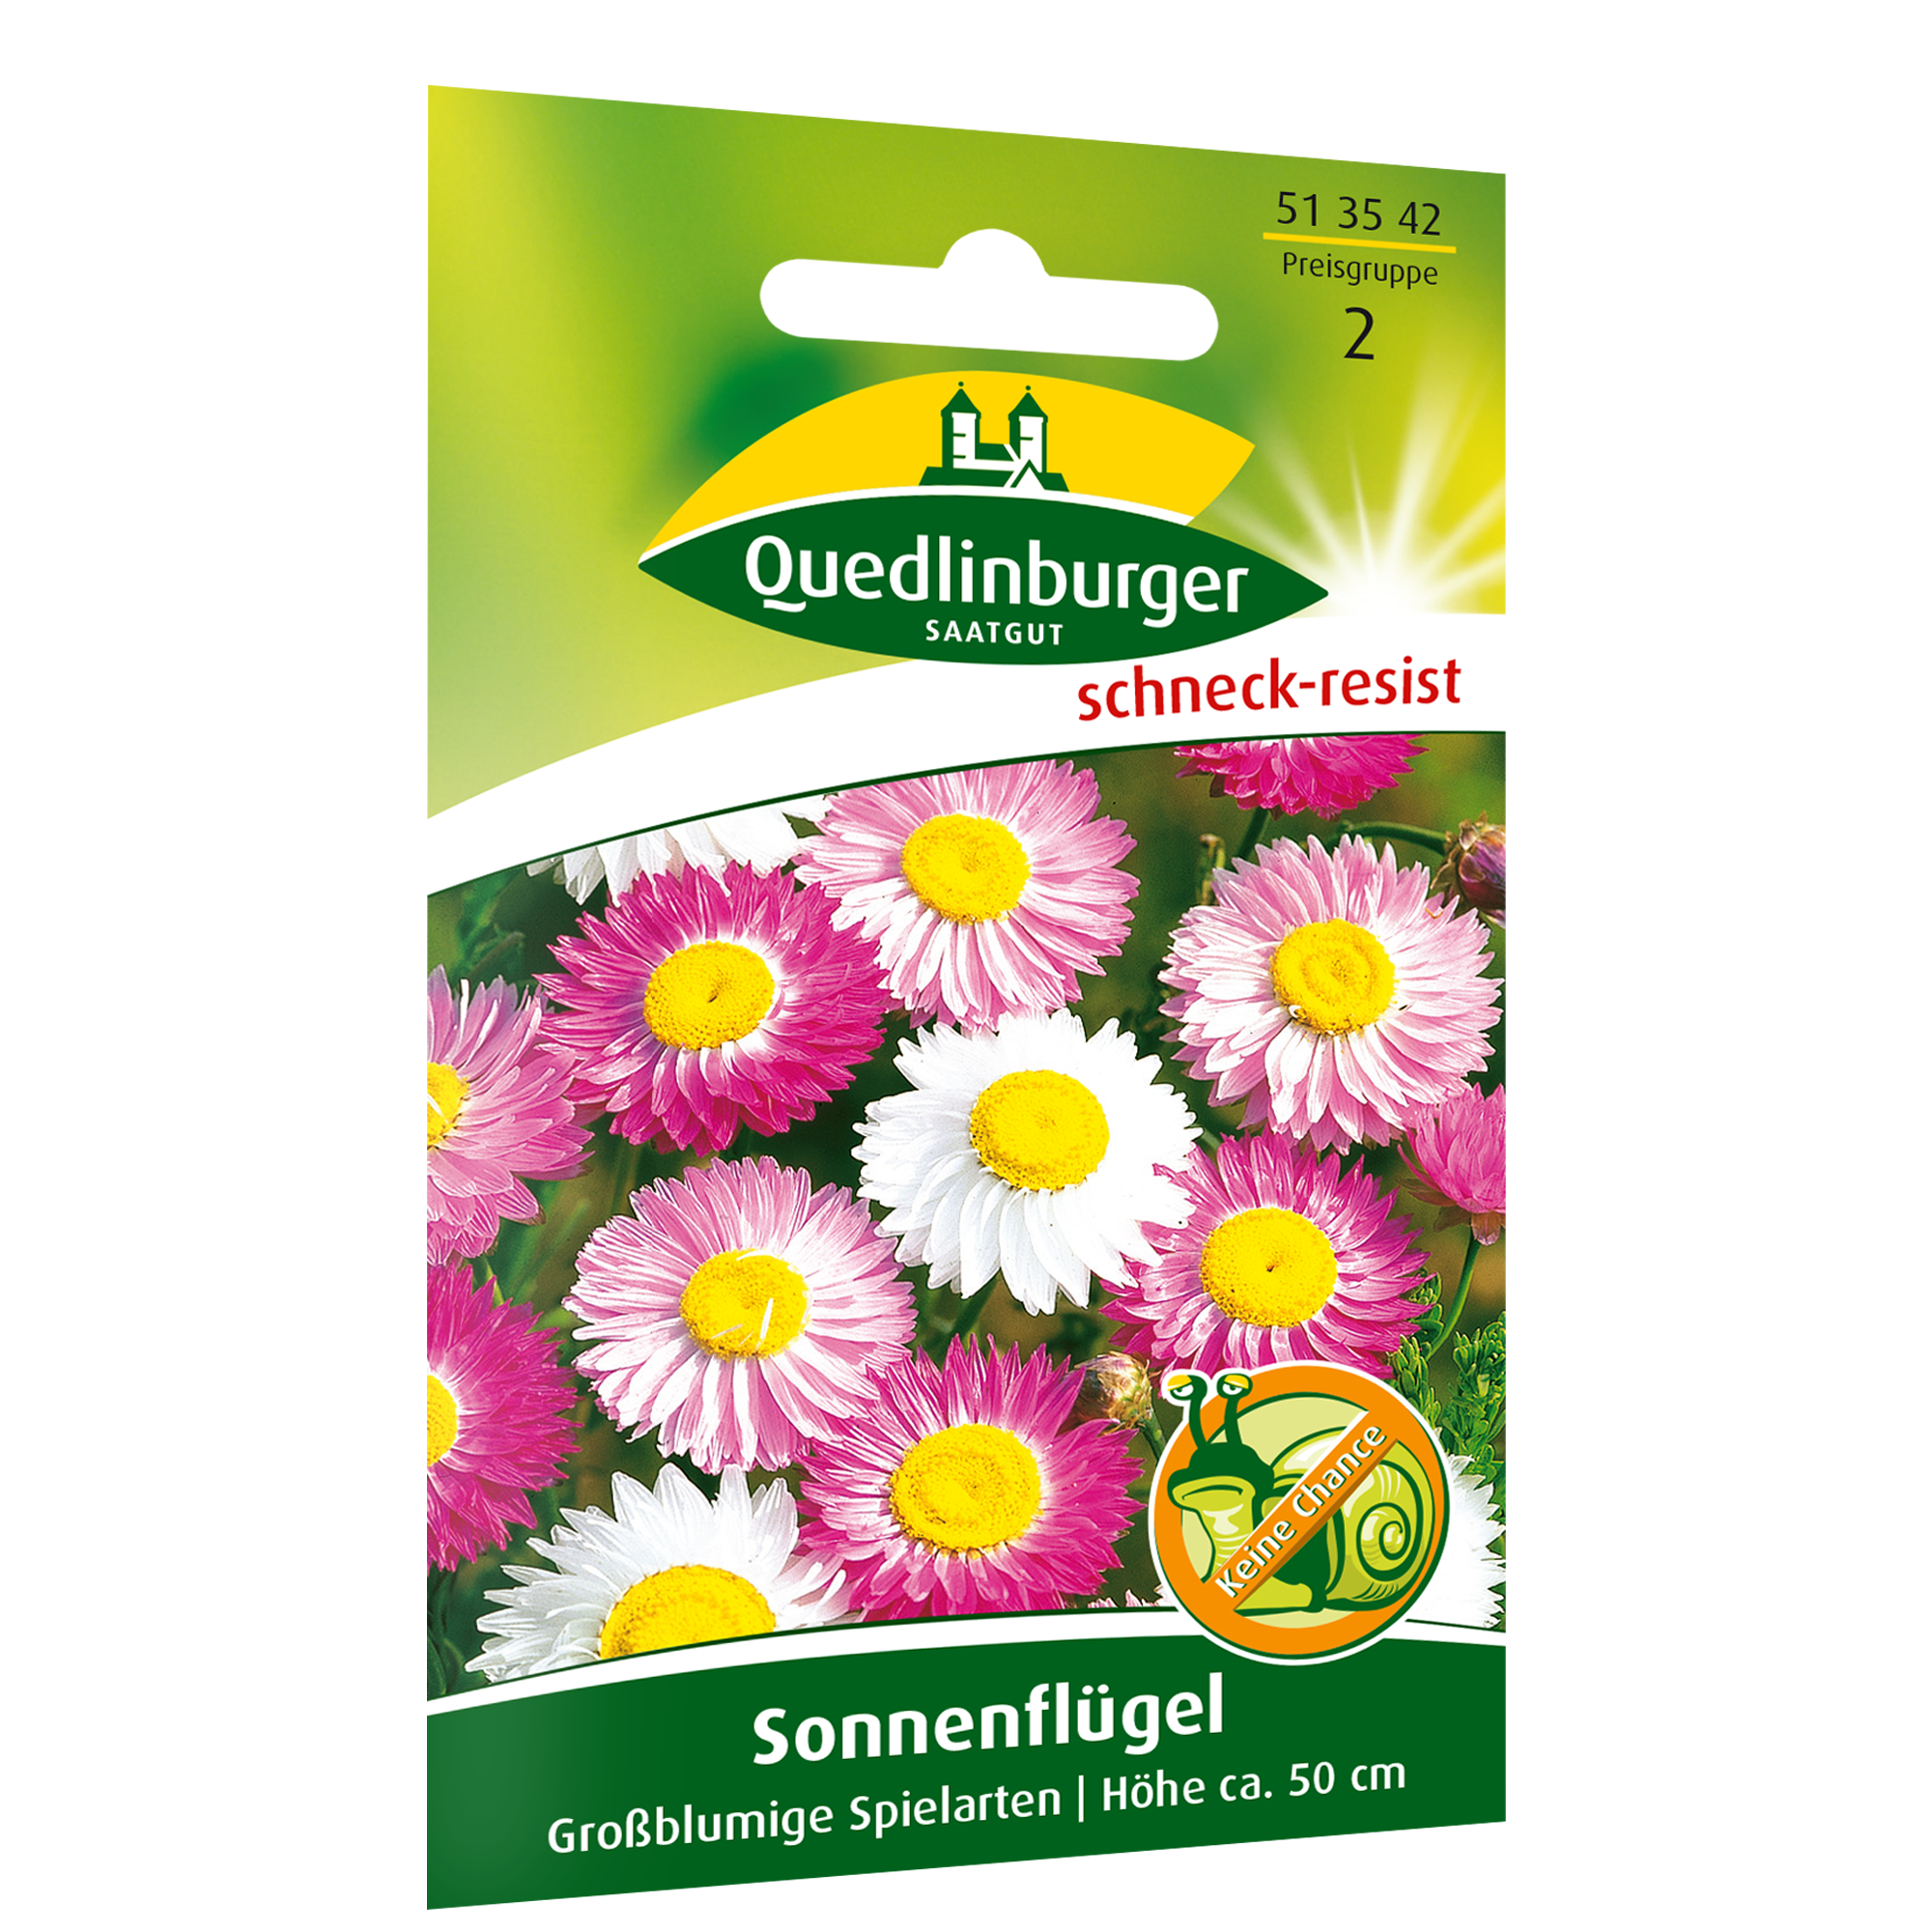 Sonnenflügel 'Großblumige Spielarten' + product picture